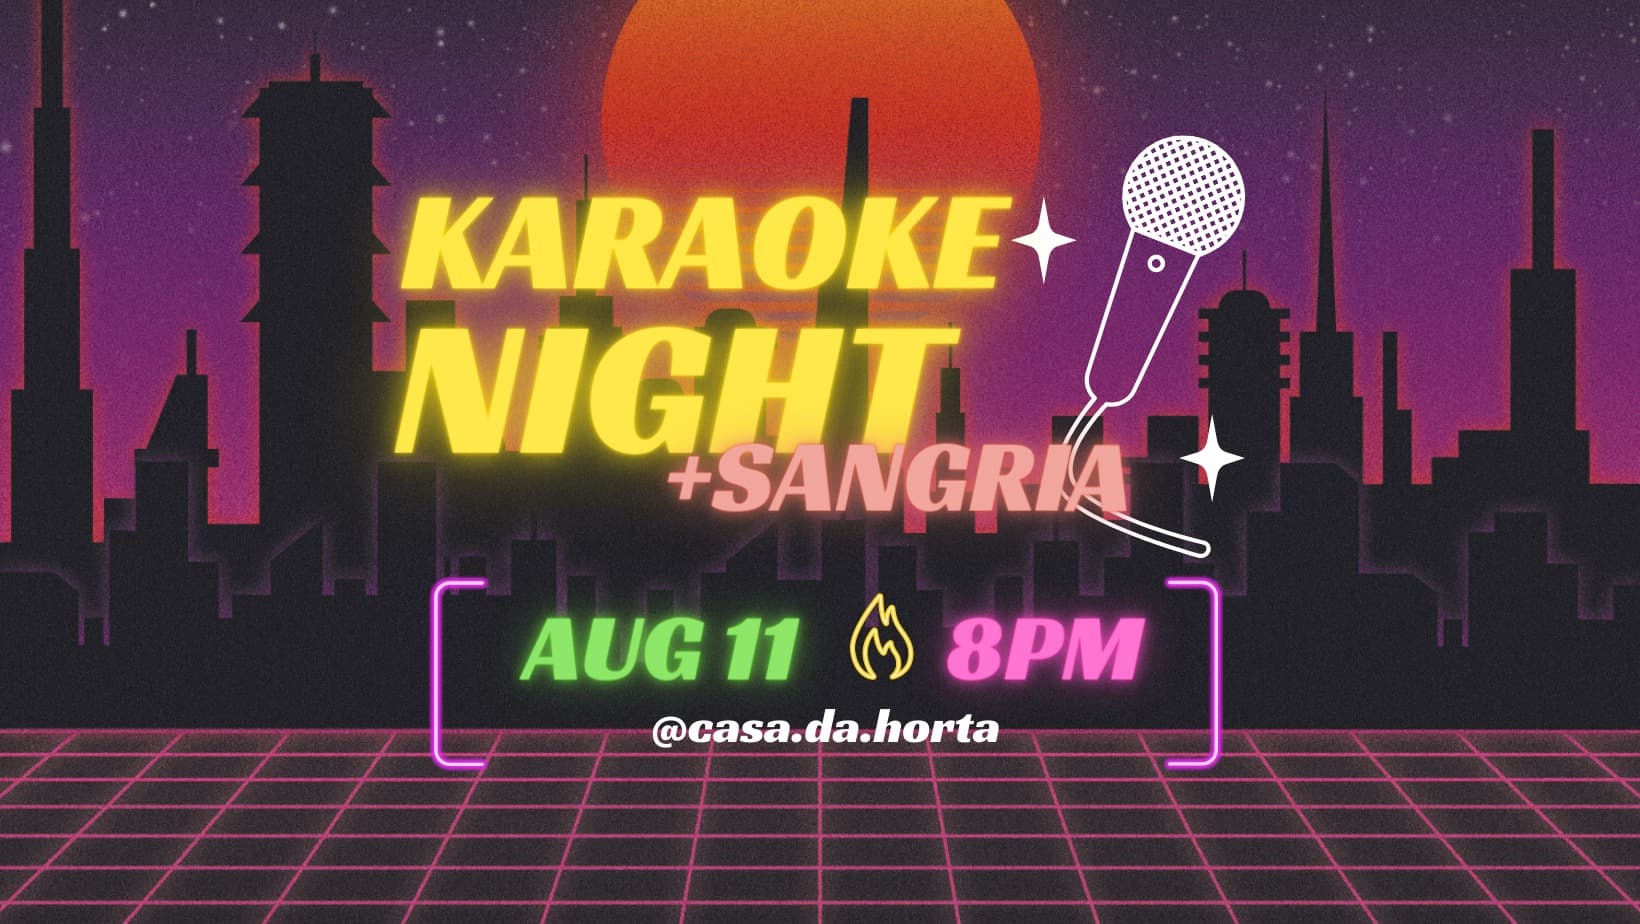 Noite de Sangria e Karaoke Karaoke and Sangria Night